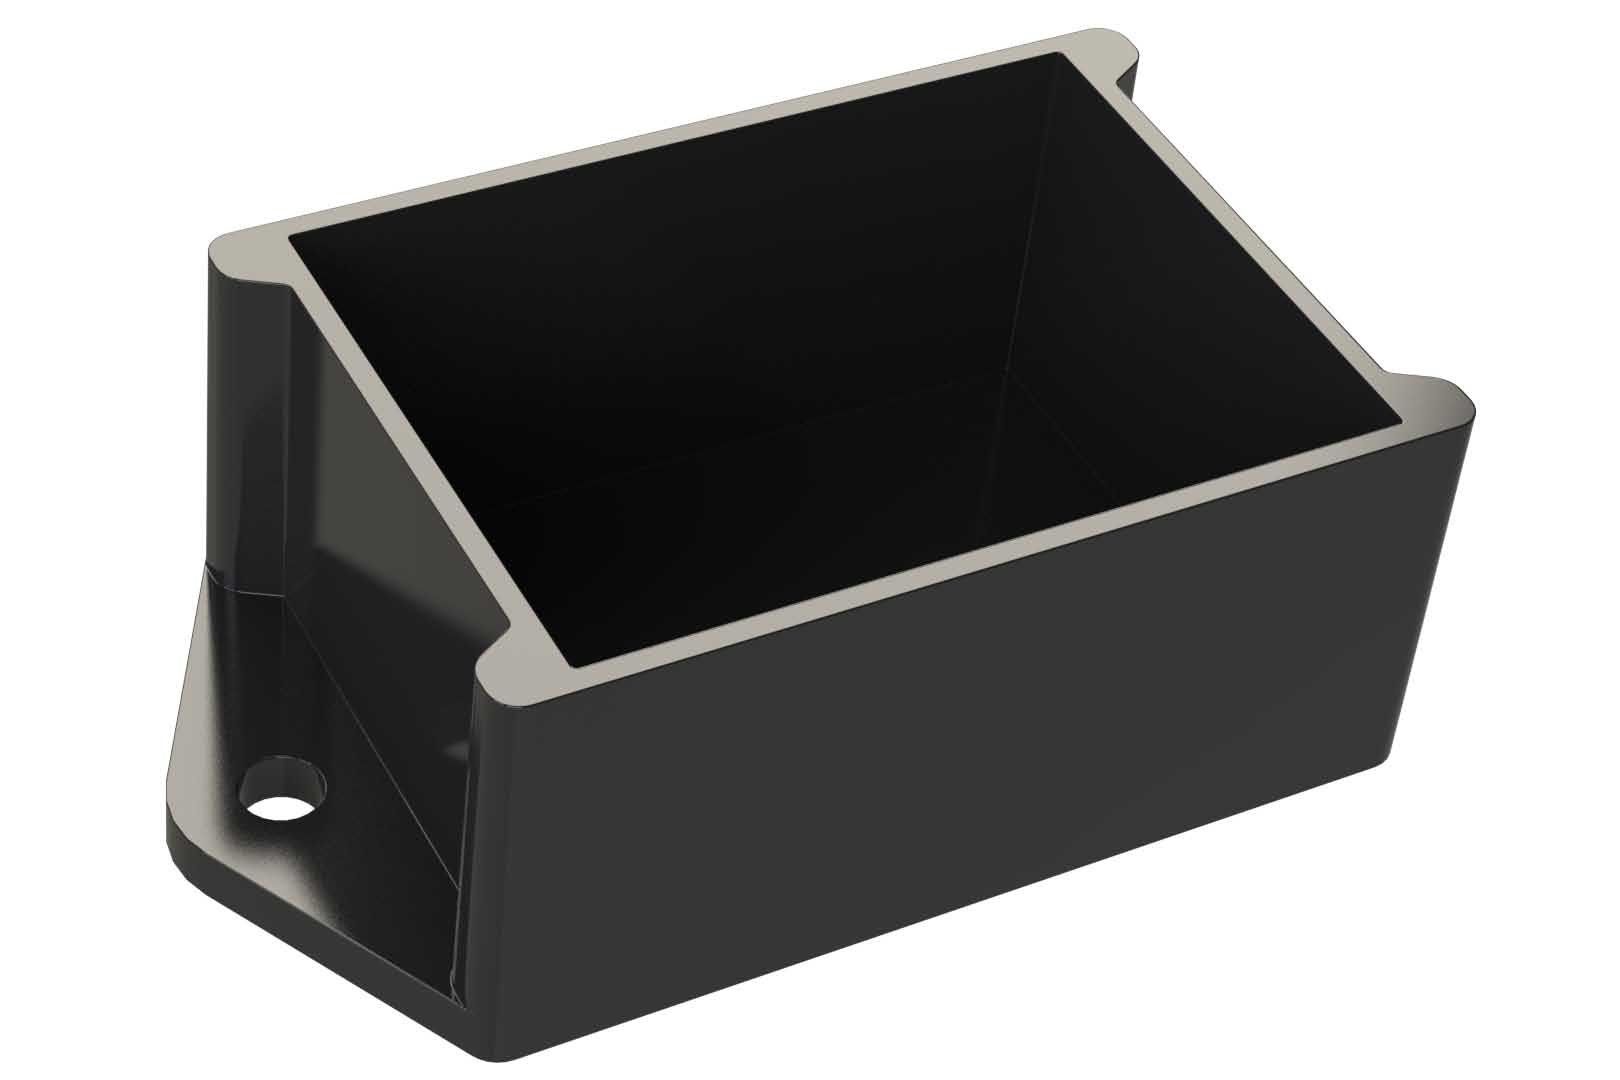 Switch Black ABS Small Plastic Box 4.1 x 4.3 x 1.5 cm Enclosure Cover Case 